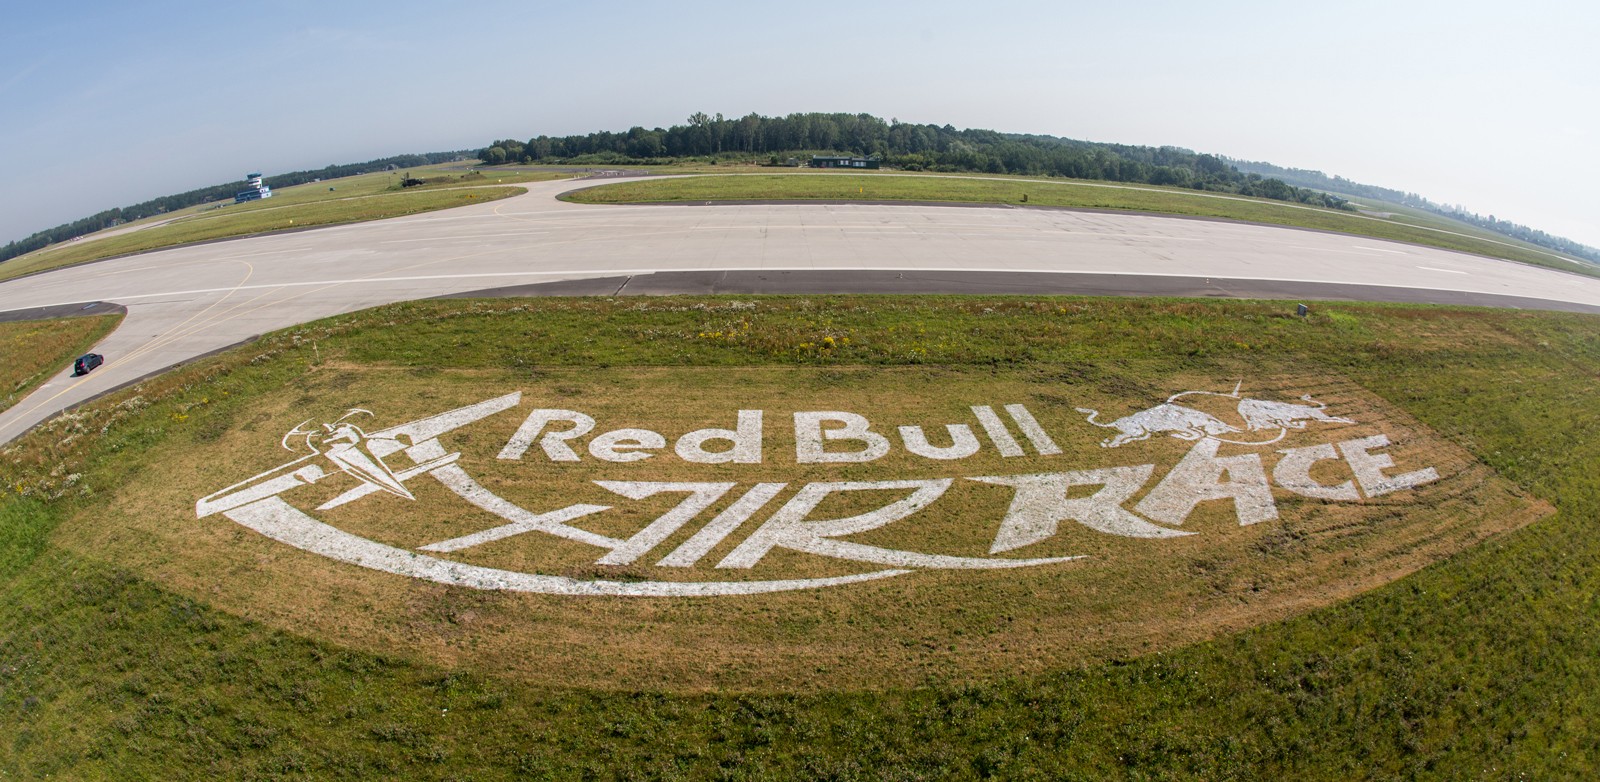 Redbull Air Race lotnisko w Gdyni 2014  | Mural malowany na trawie - RedBull Air Race Austria | Portfolio